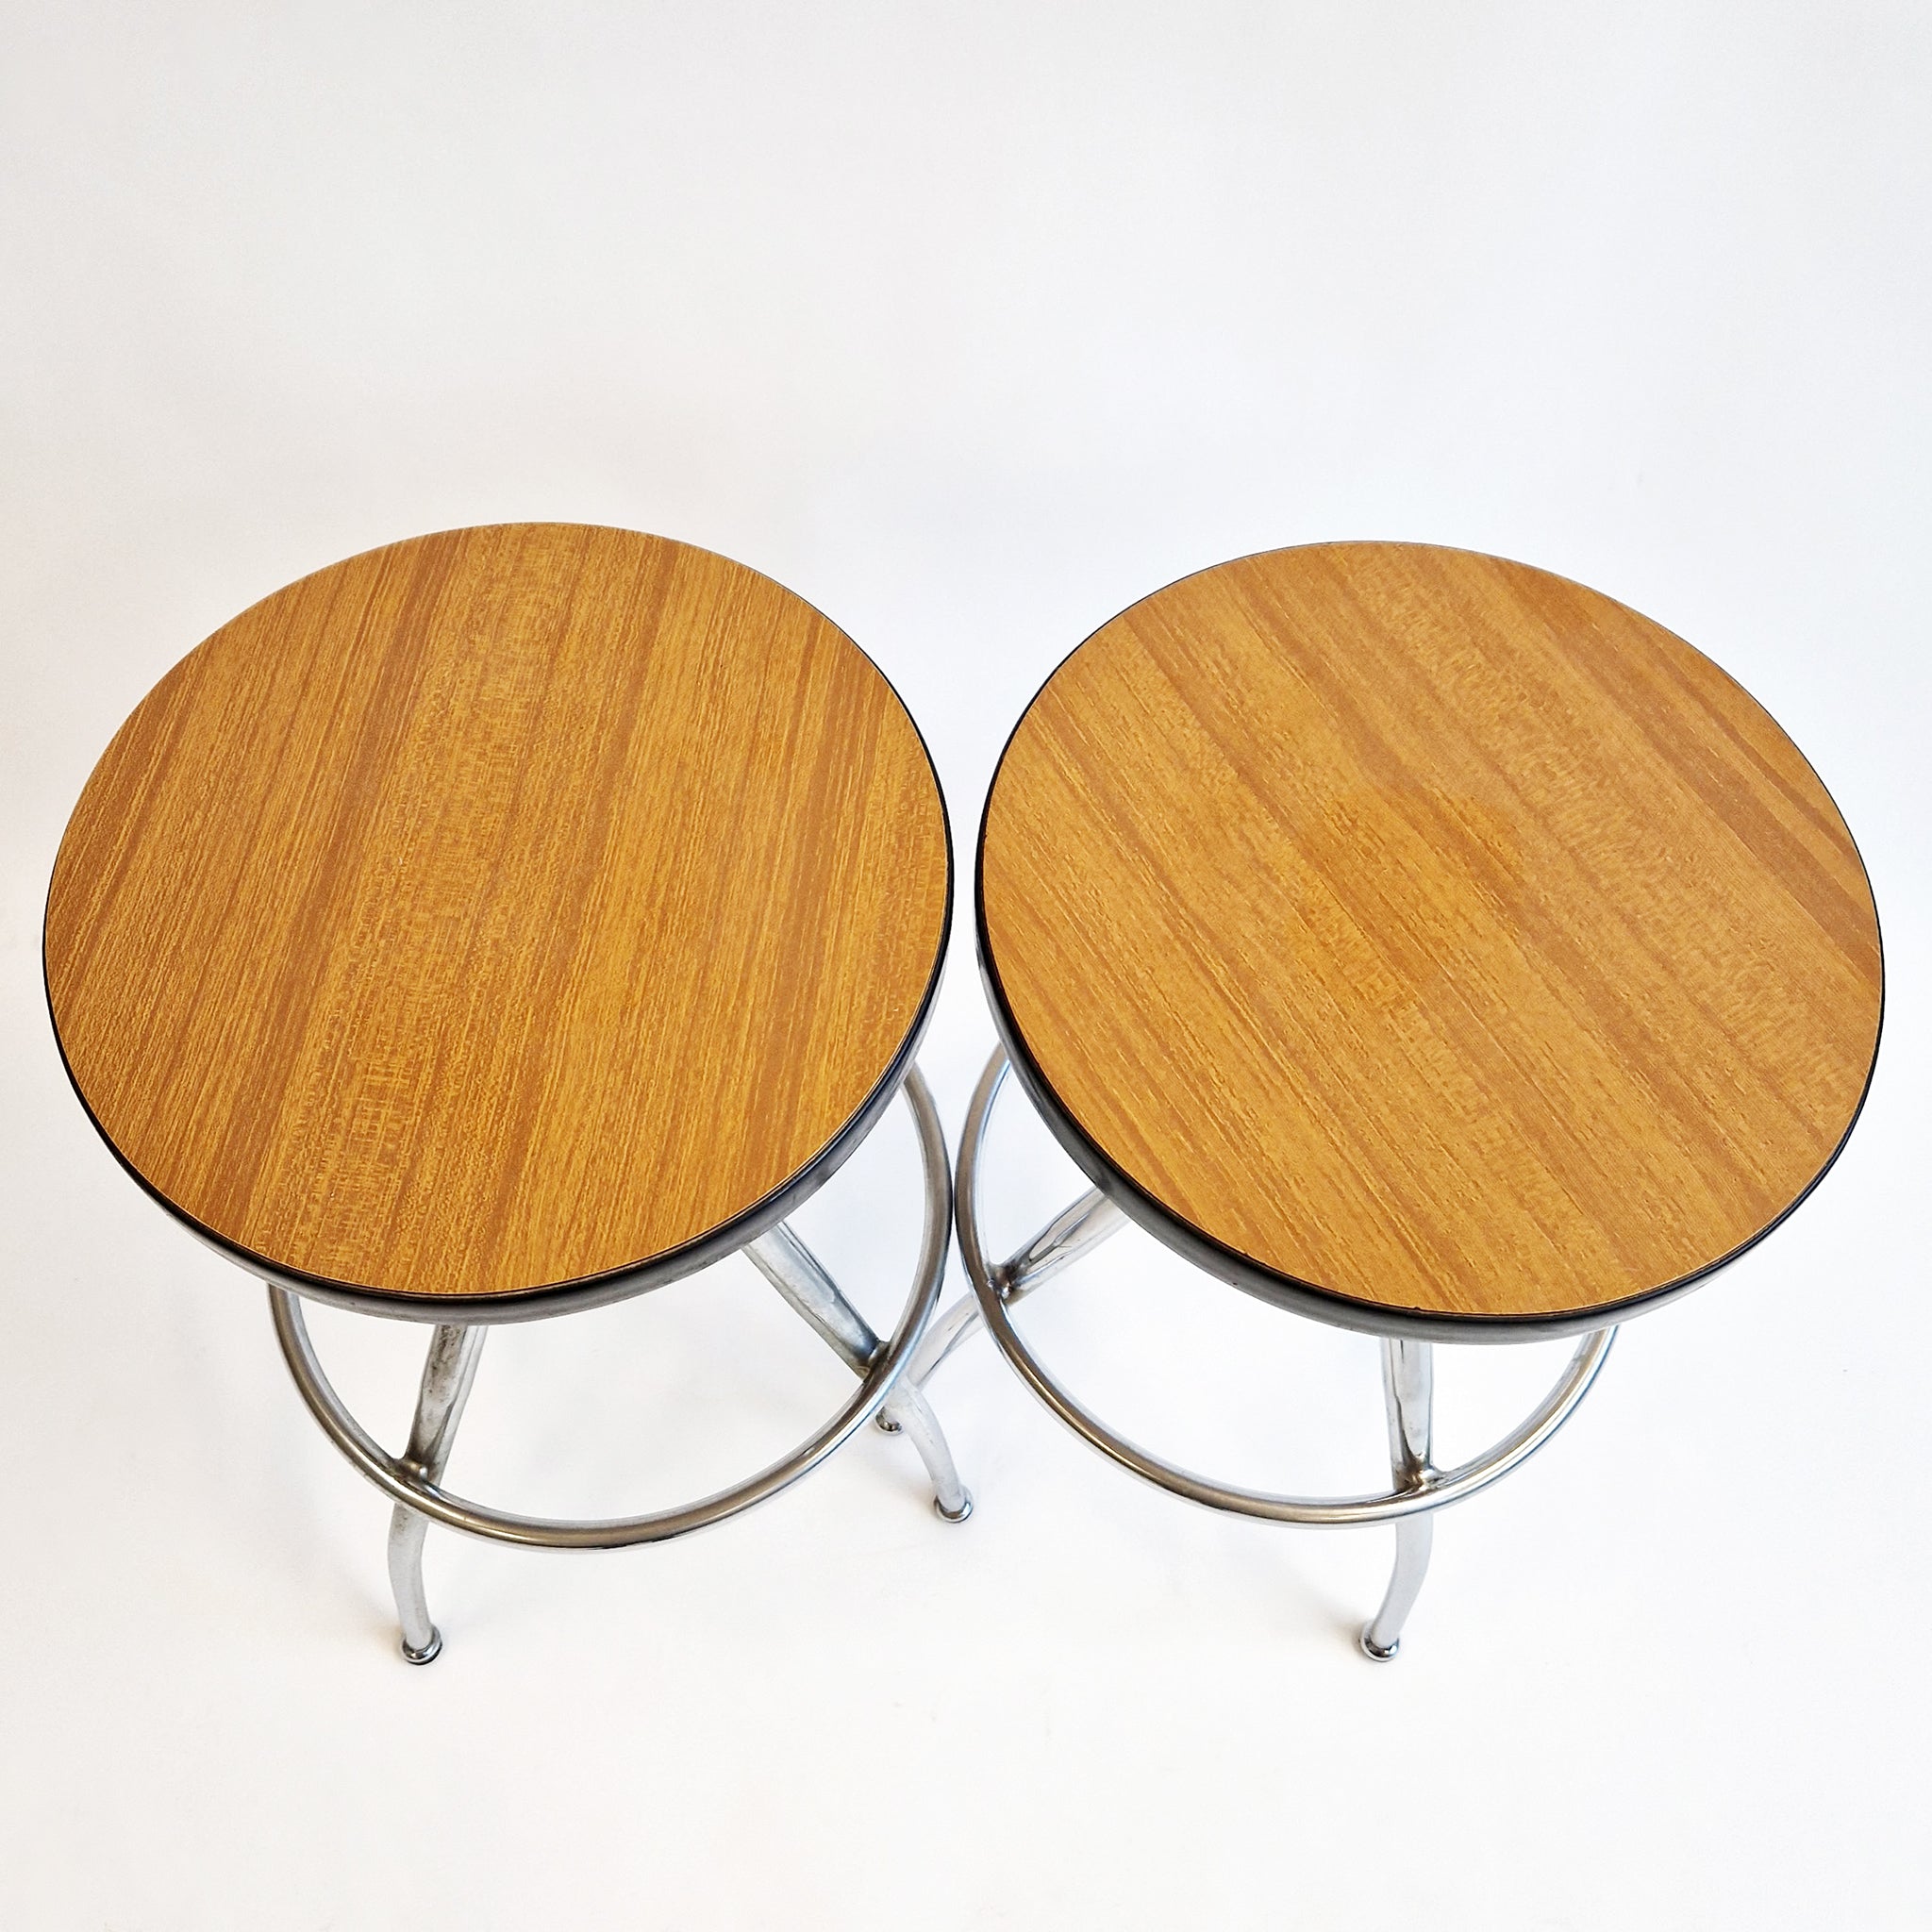 1960s Italian chrome stools